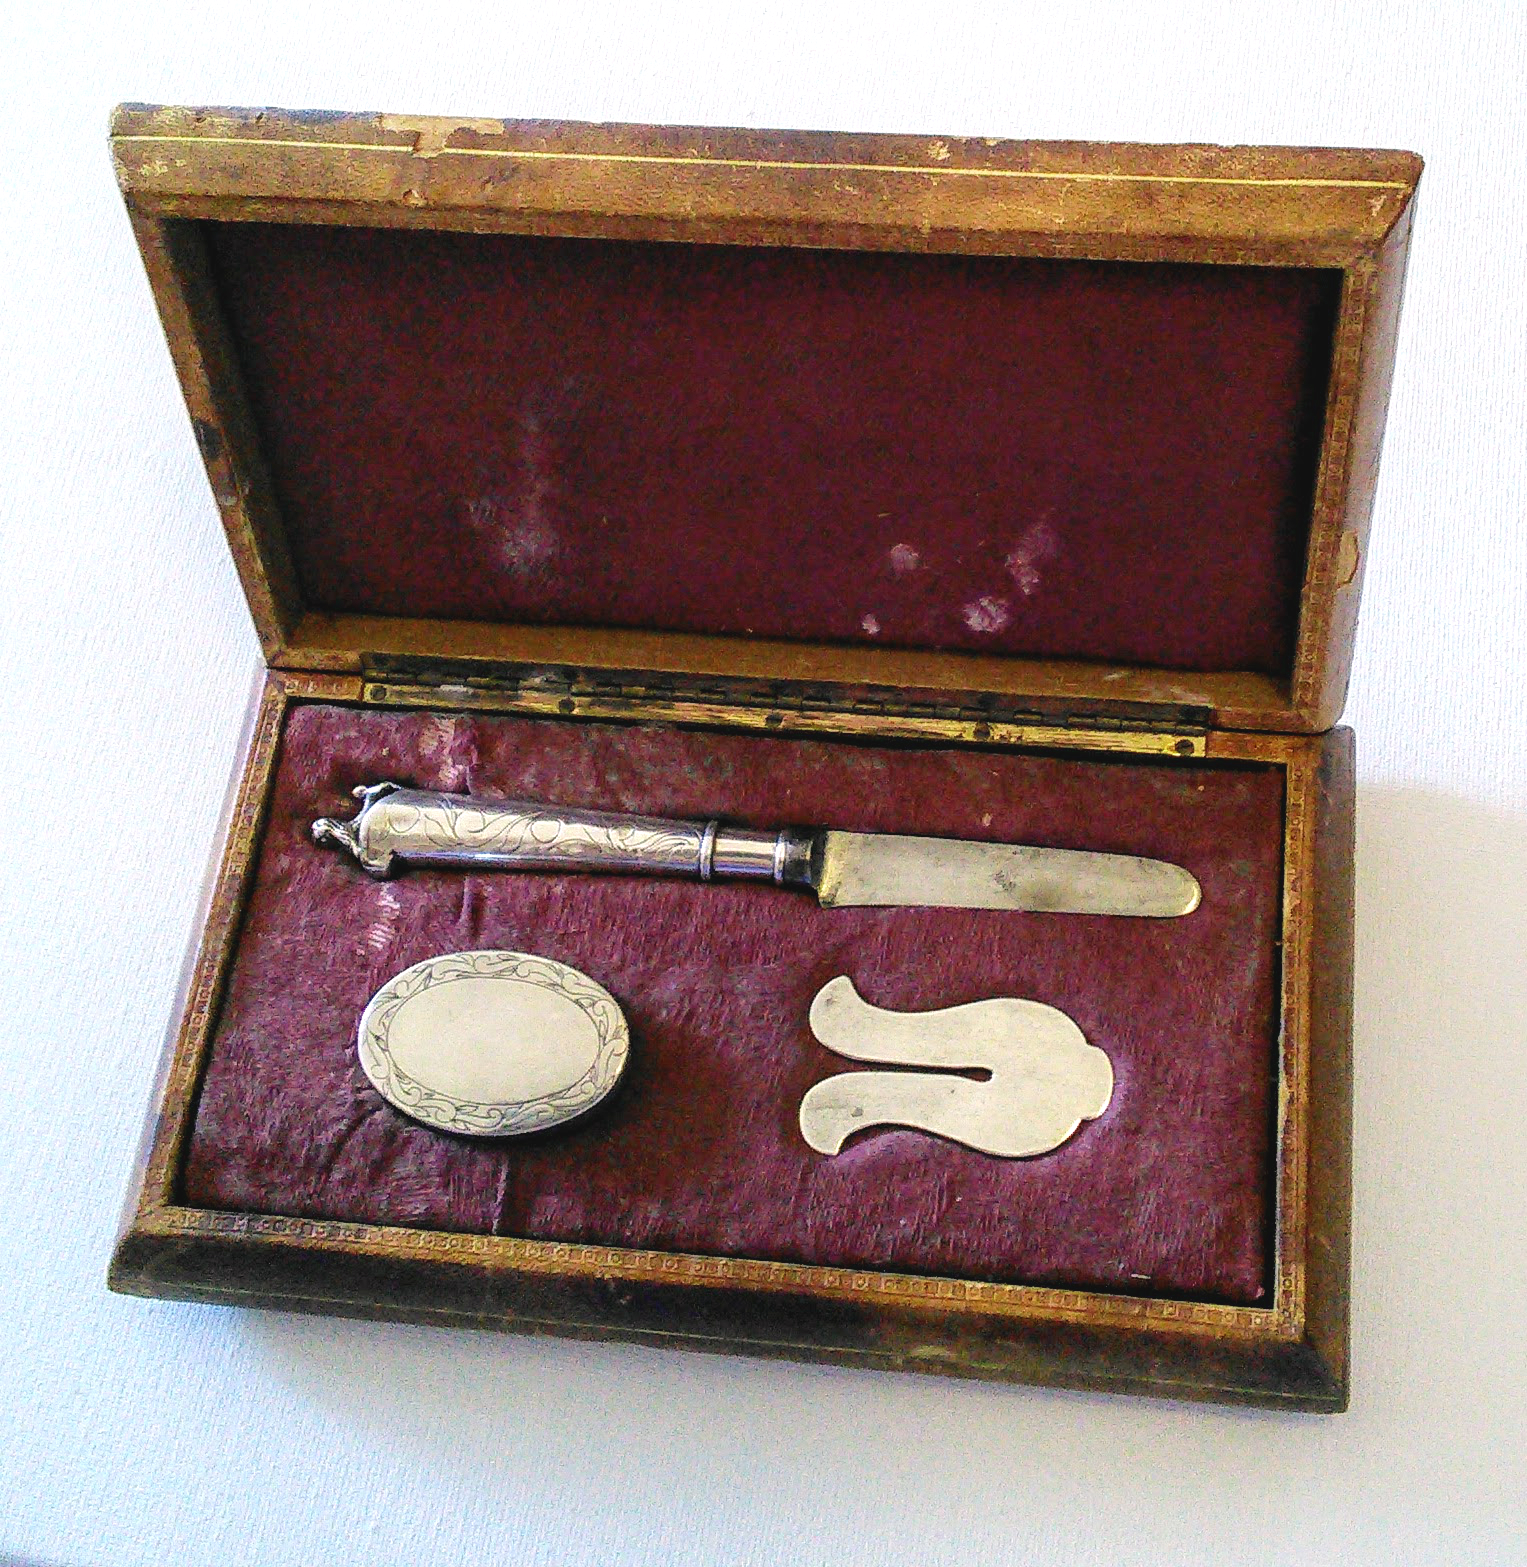 Netherlands circumcision knife, shield
          and powder box, 18th century